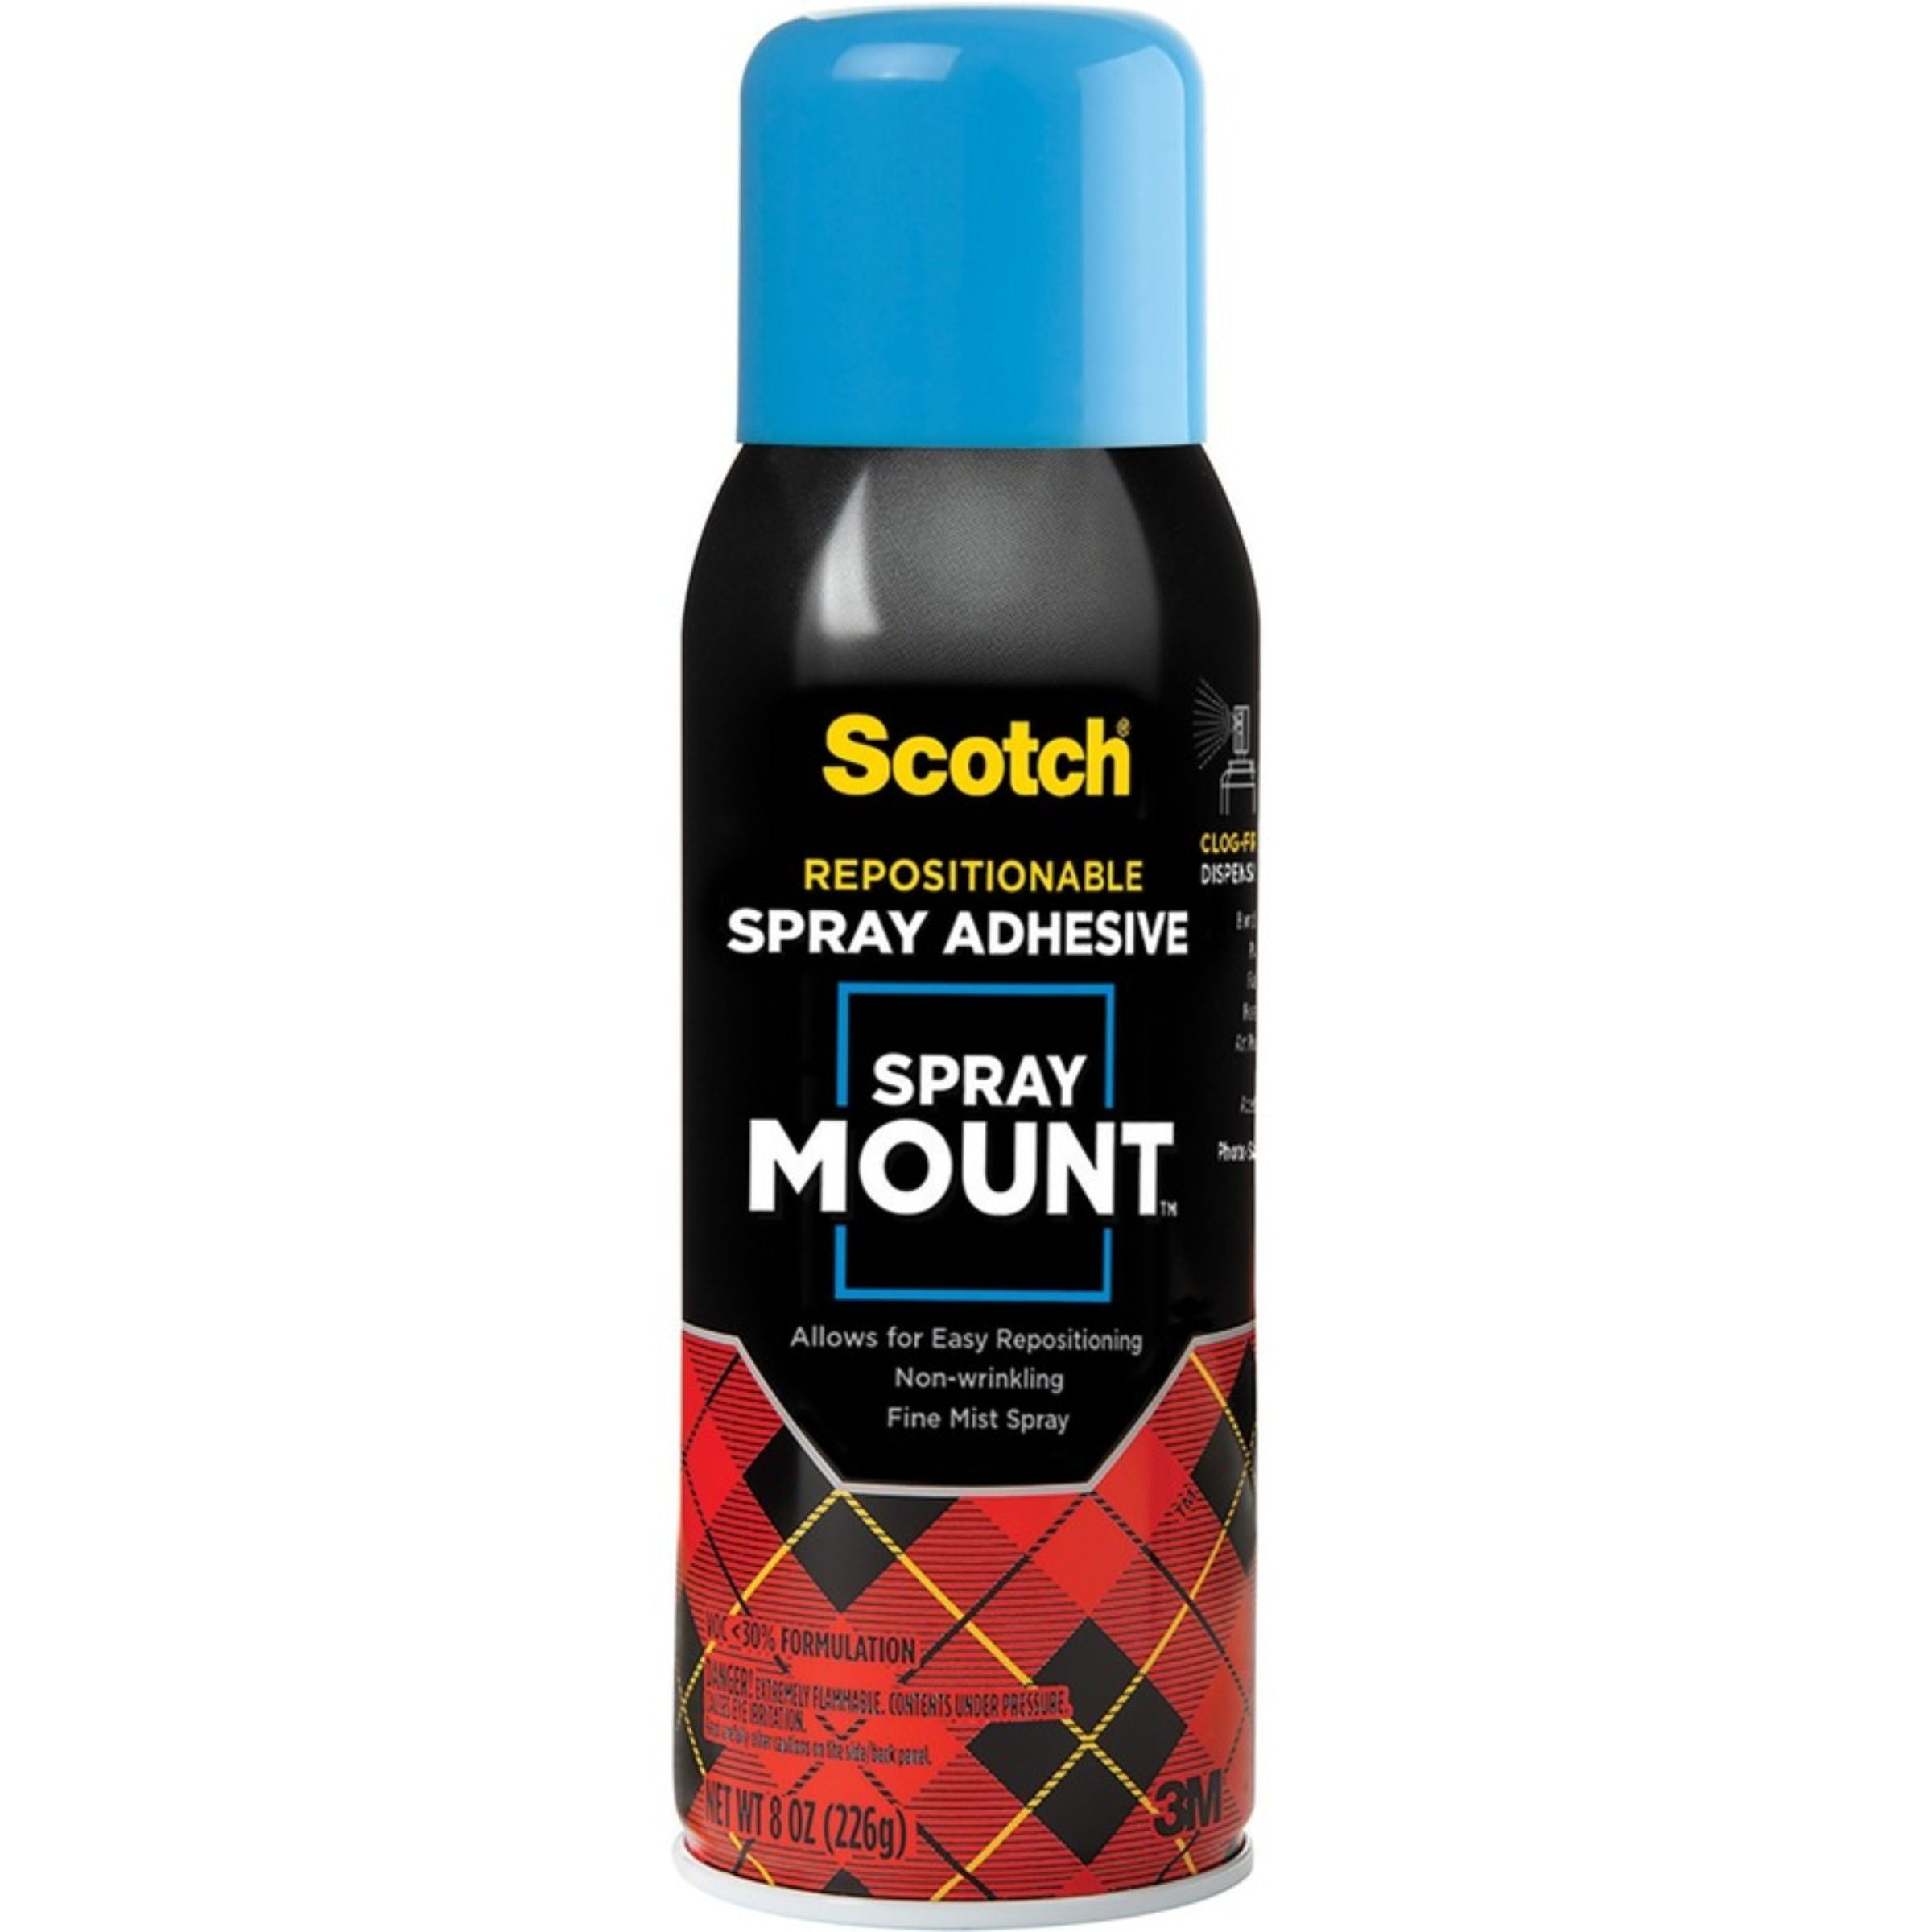 Scotch Spray Mount Repositionable Spray Adhesive